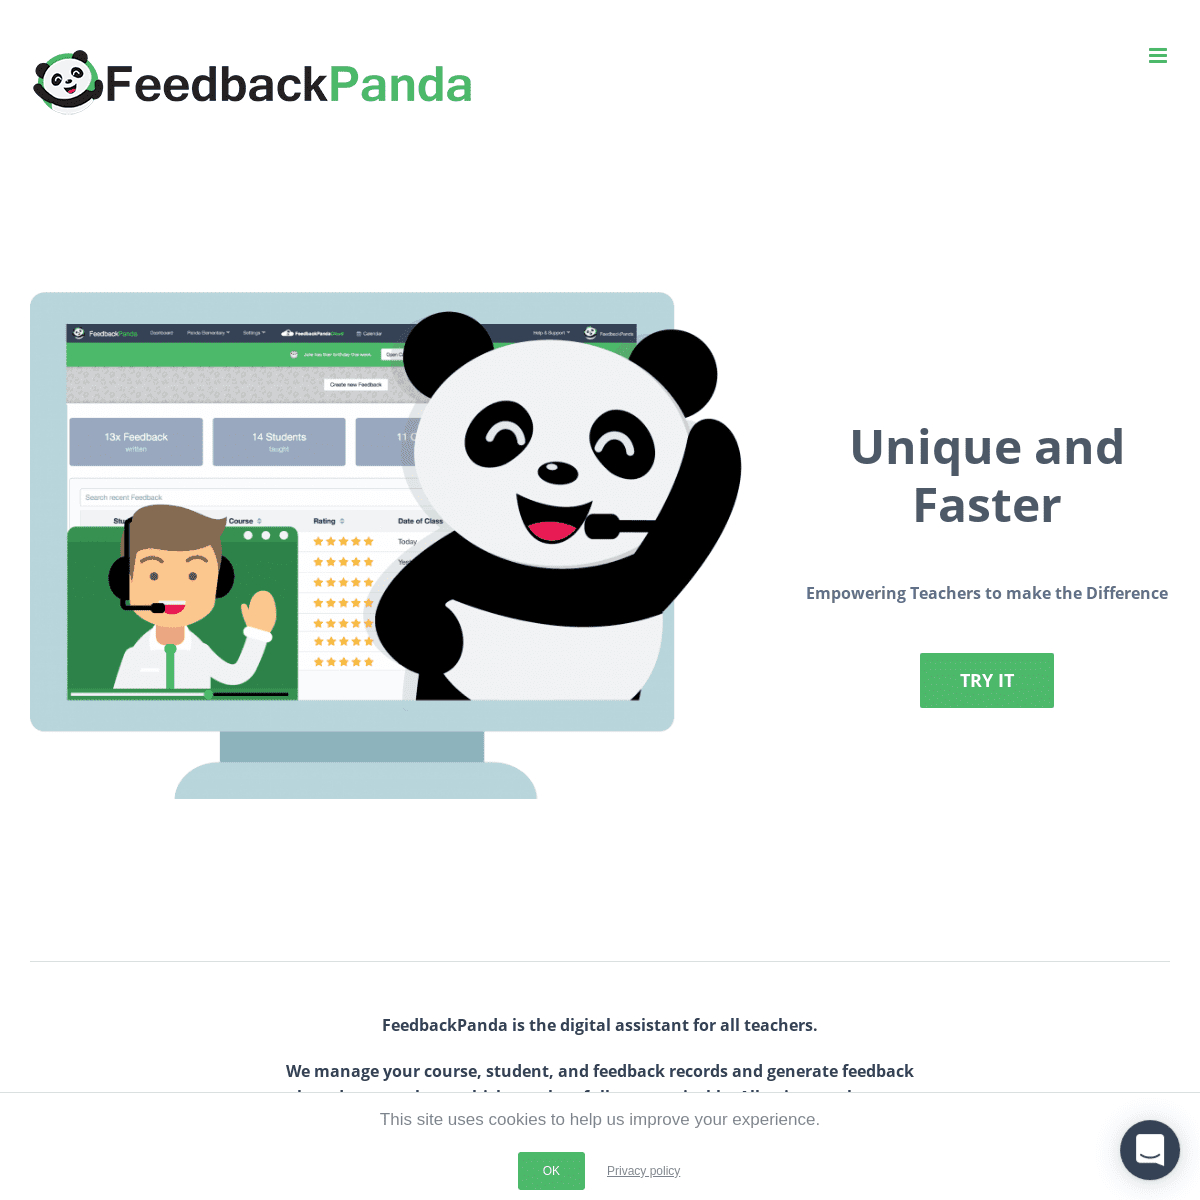 A complete backup of feedbackpanda.com